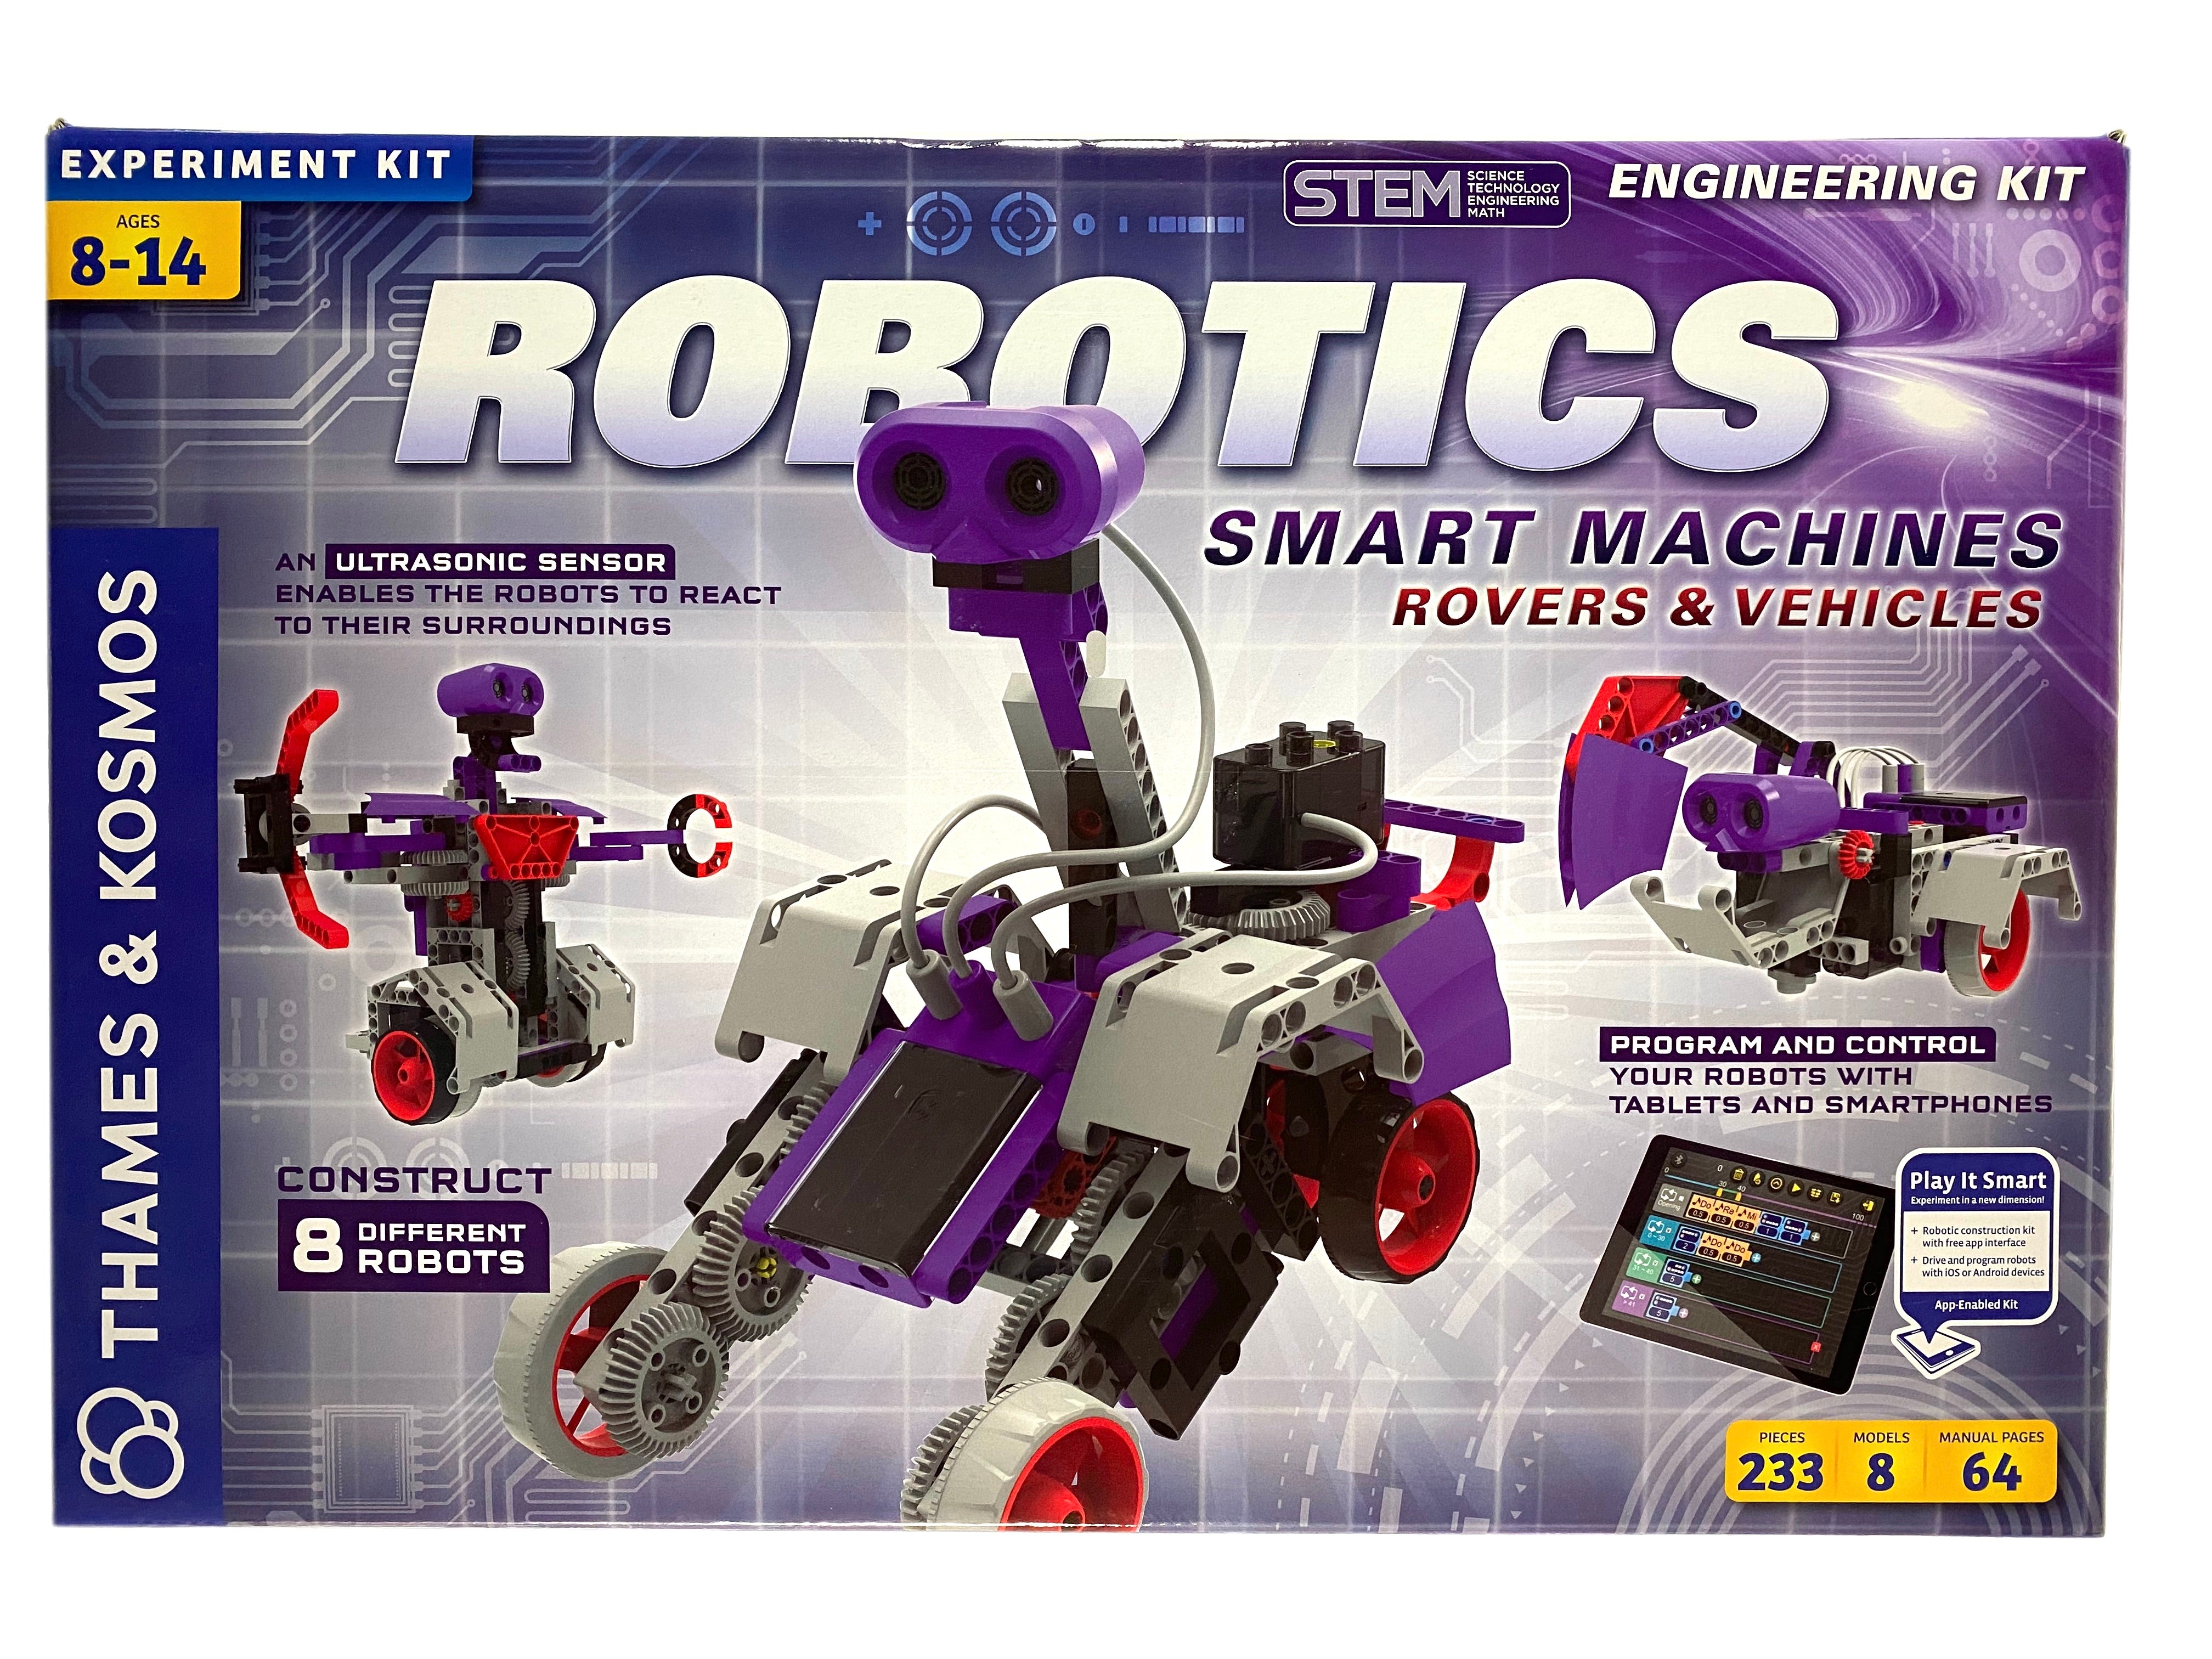 Robotics Smart Machines Rovers & Vehicles    